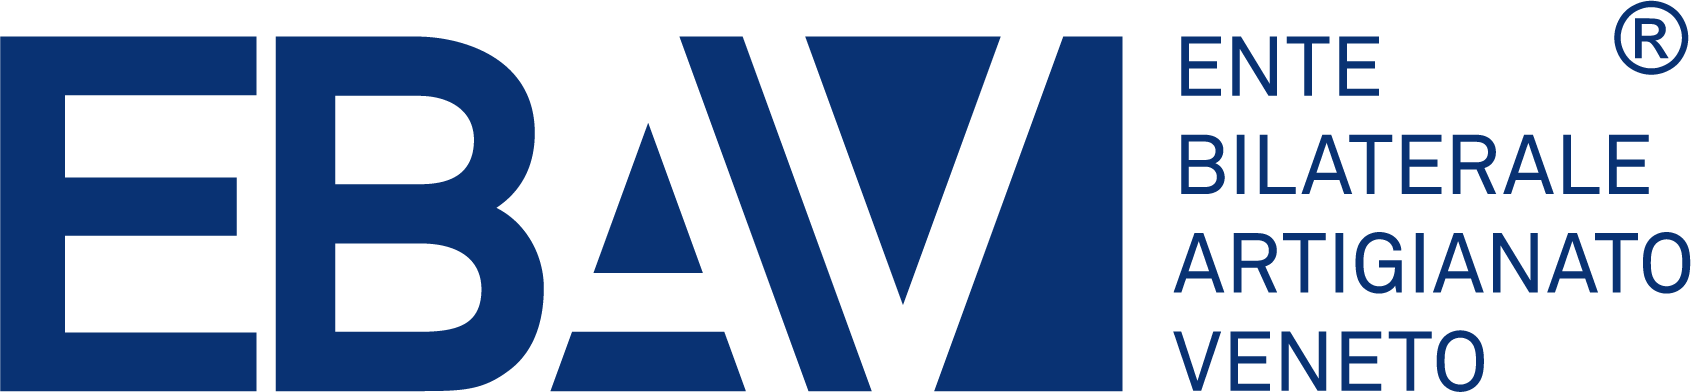 Logo-EBAV-Integrale-trasparente-registrato_600dpi